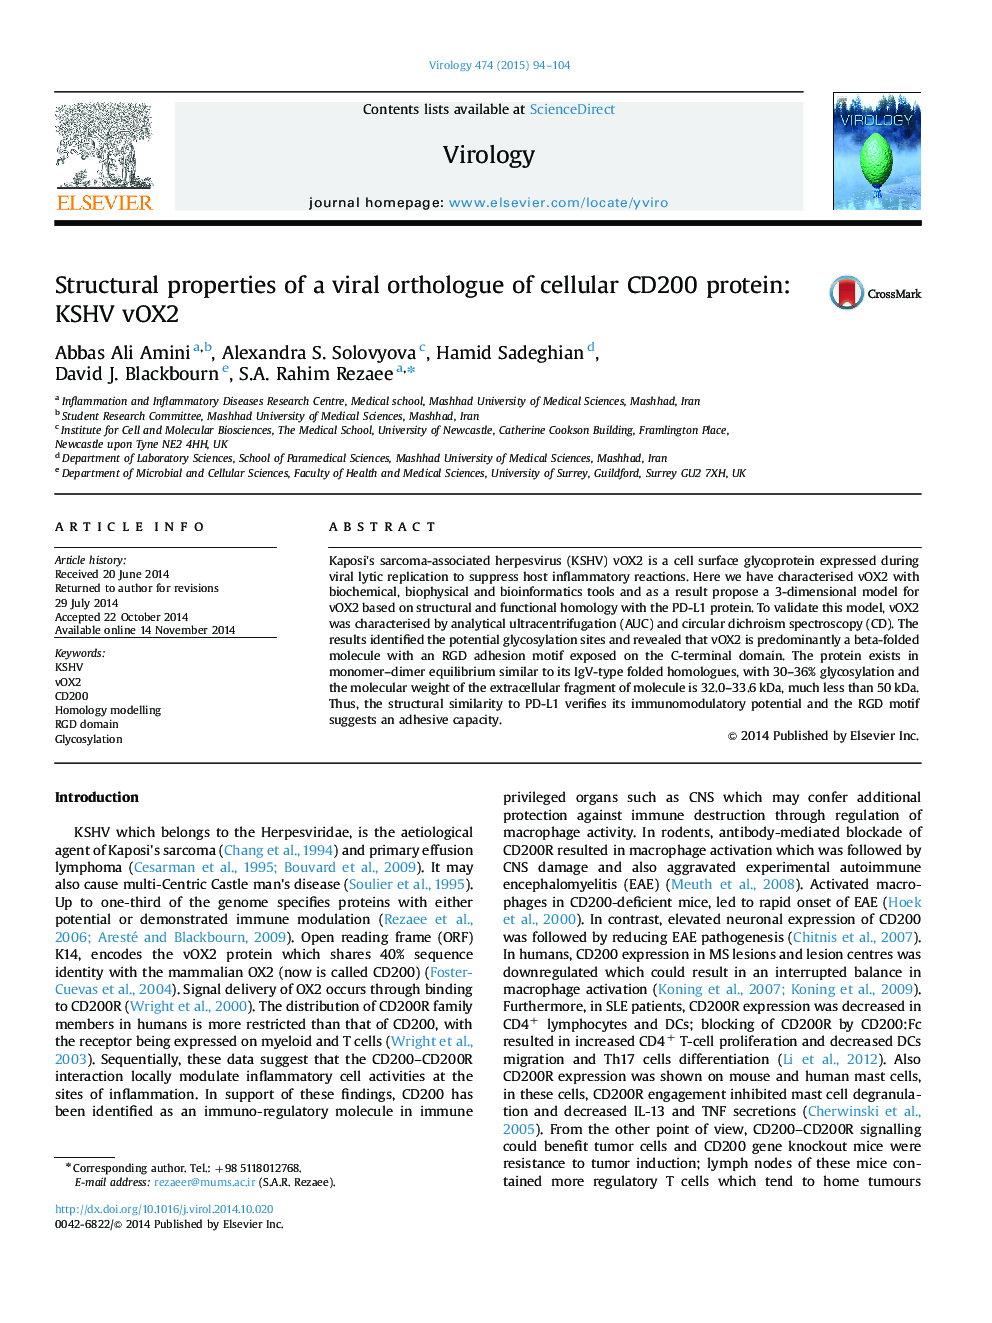 Structural properties of a viral orthologue of cellular CD200 protein: KSHV vOX2